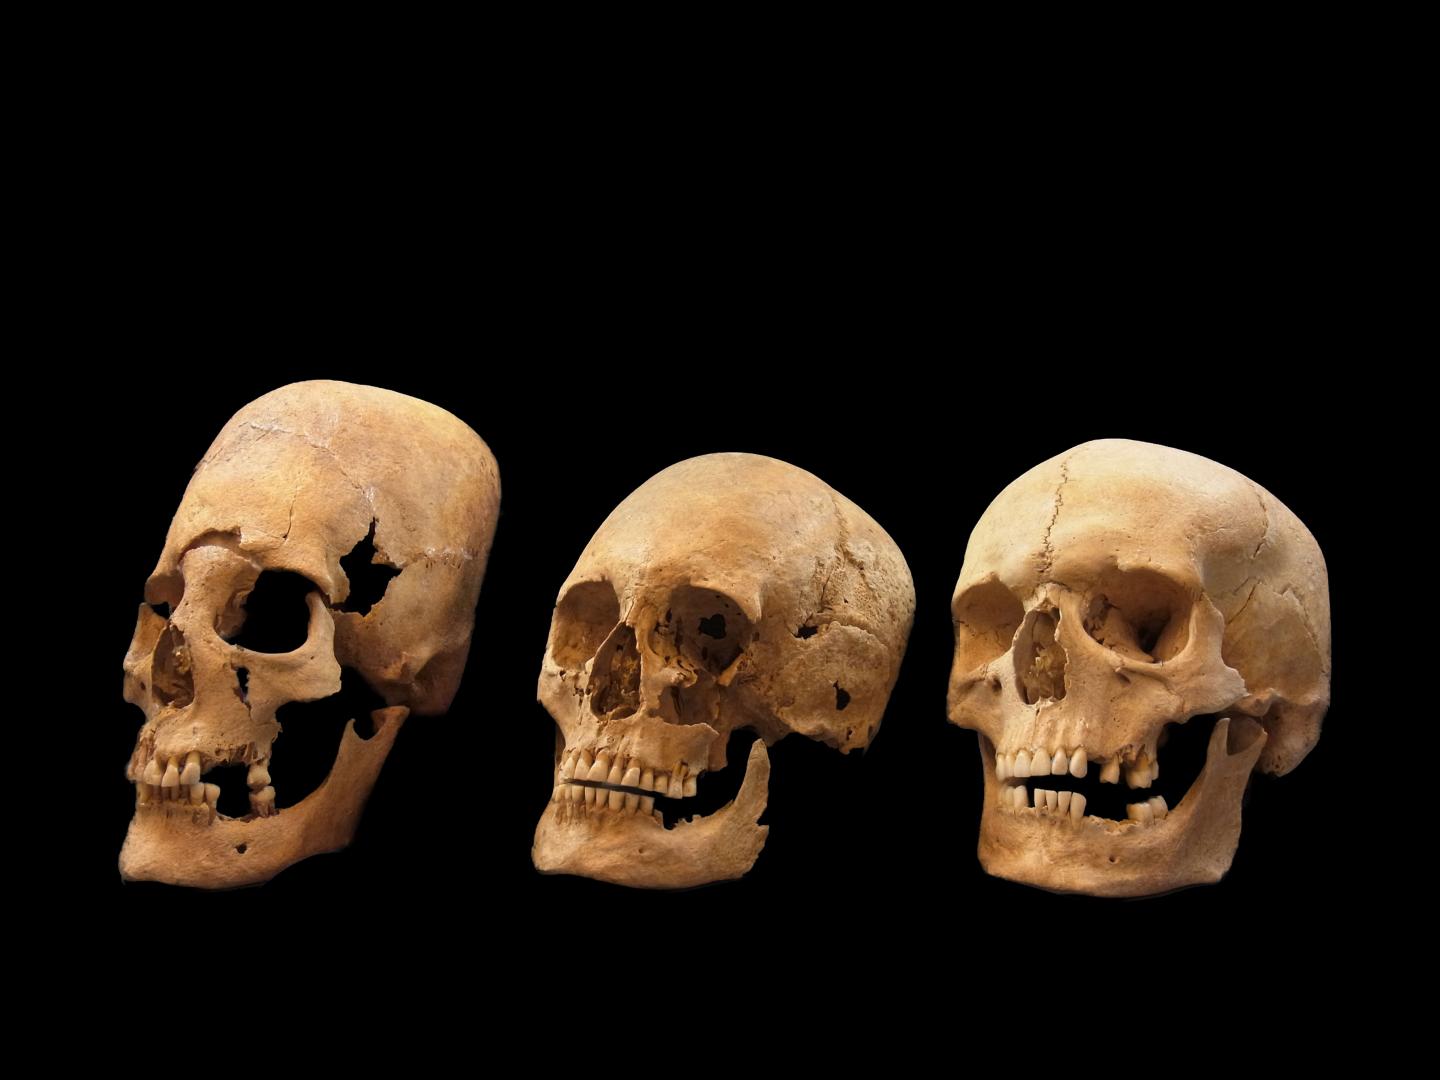 A Deformed, Intermediate, and Non-deformed Human Skull